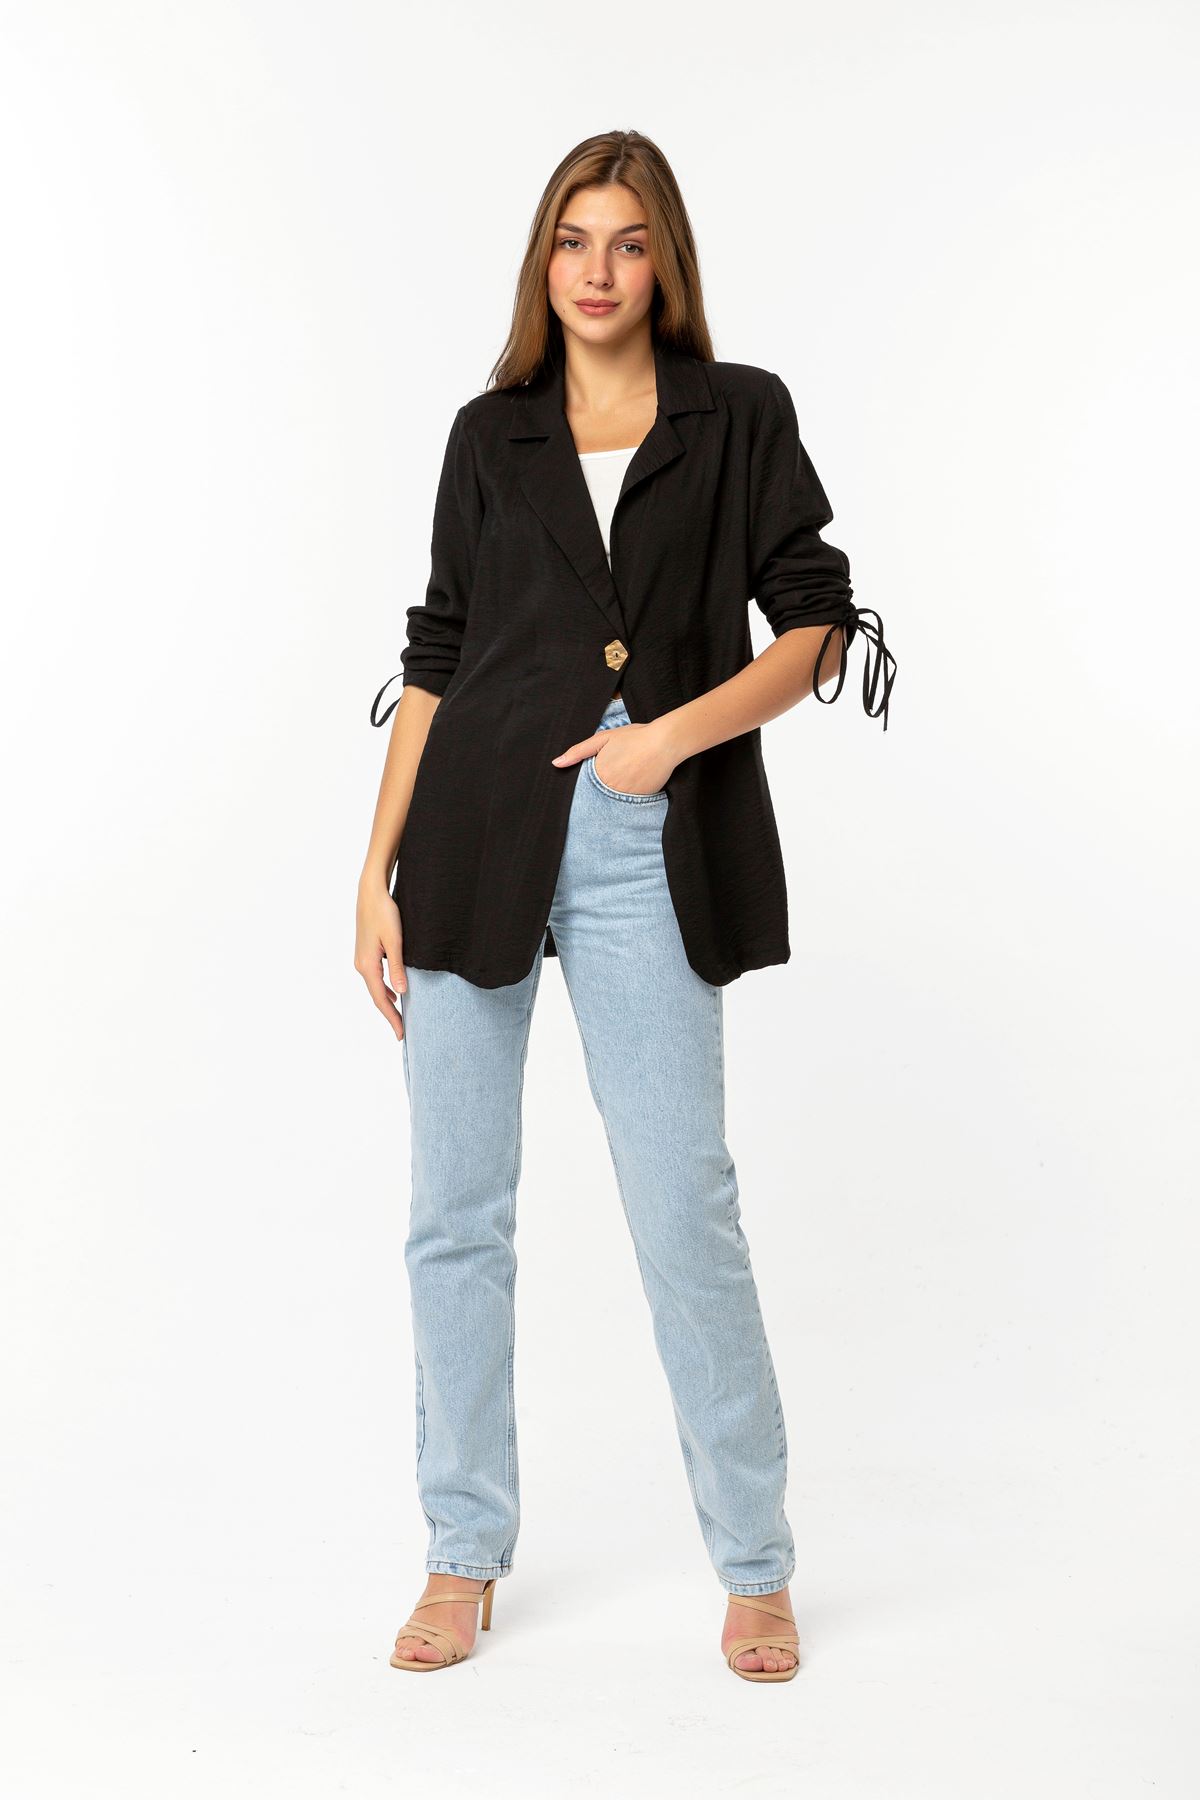 Aerobin Fabric Revere Collar Hip Height Comfy Women Jacket - Black